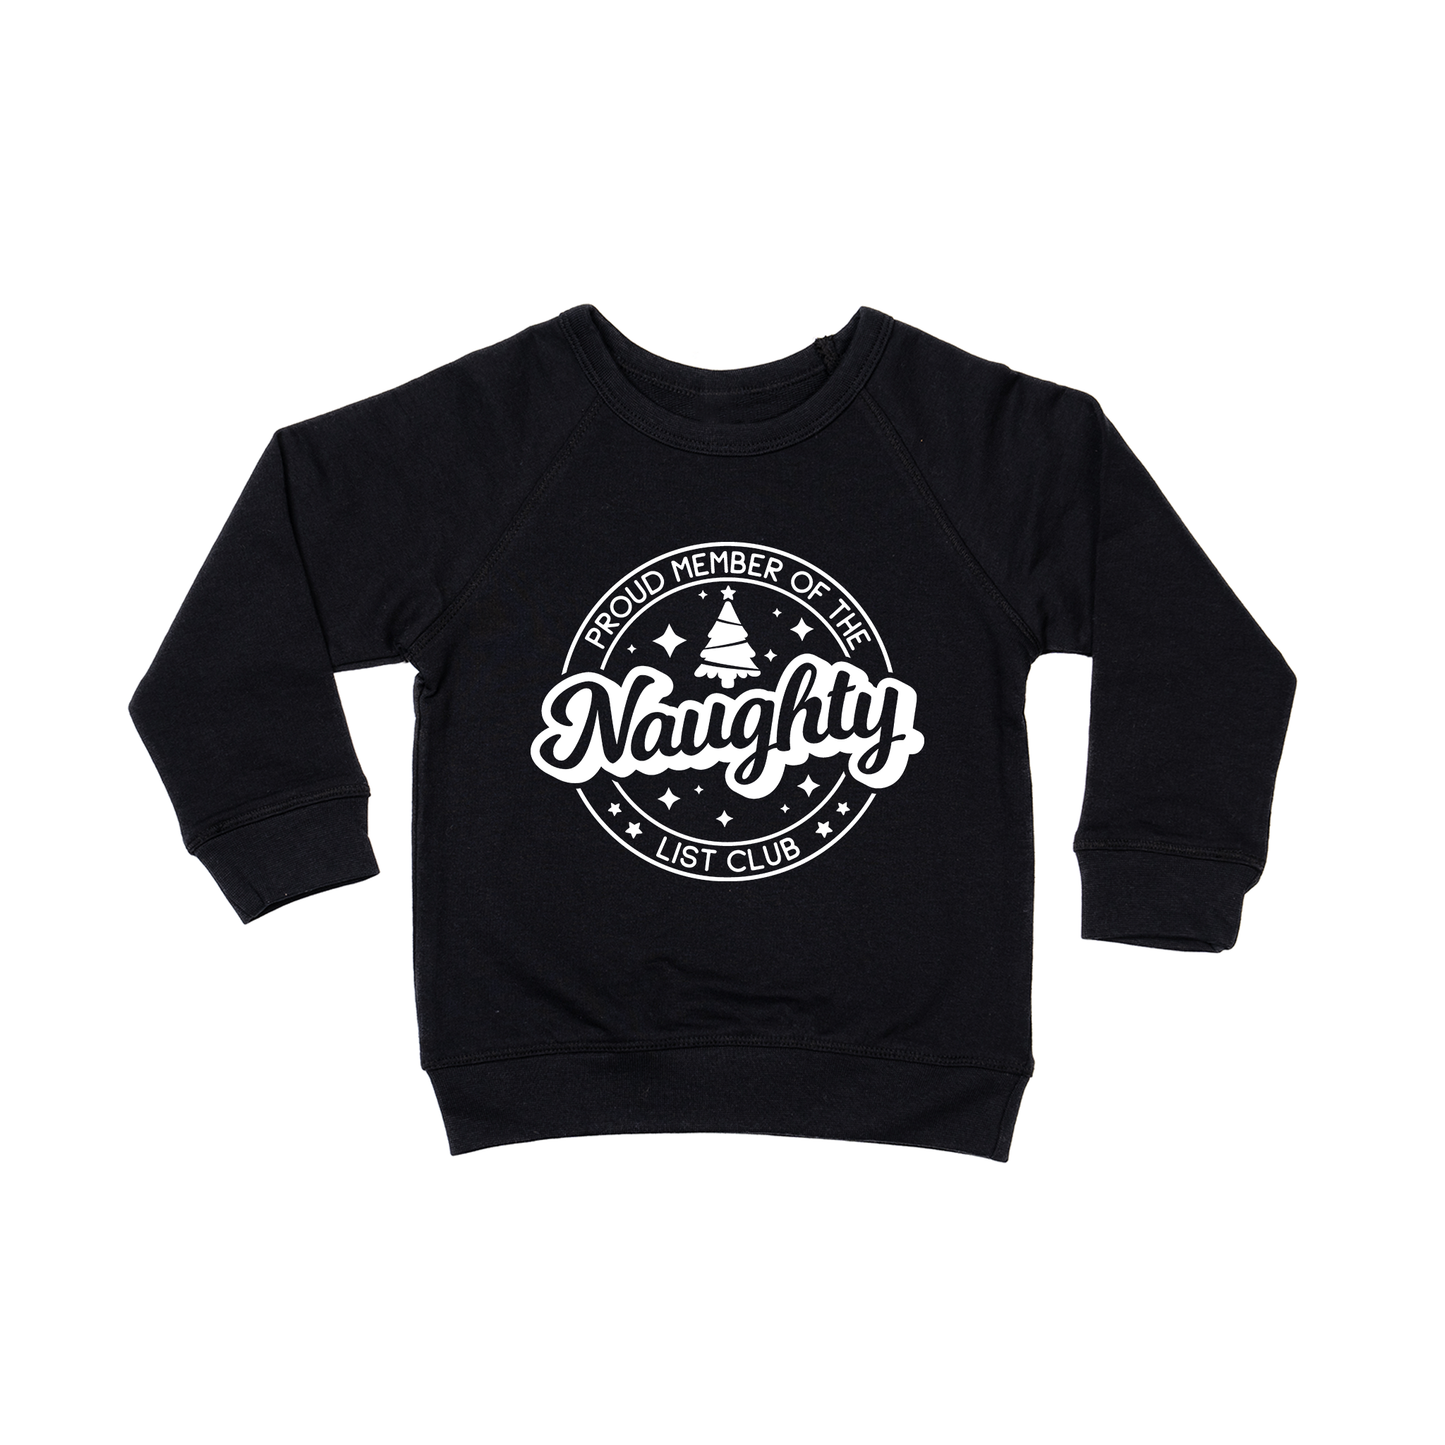 Naughty List Club (White) - Kids Sweatshirt (Black)